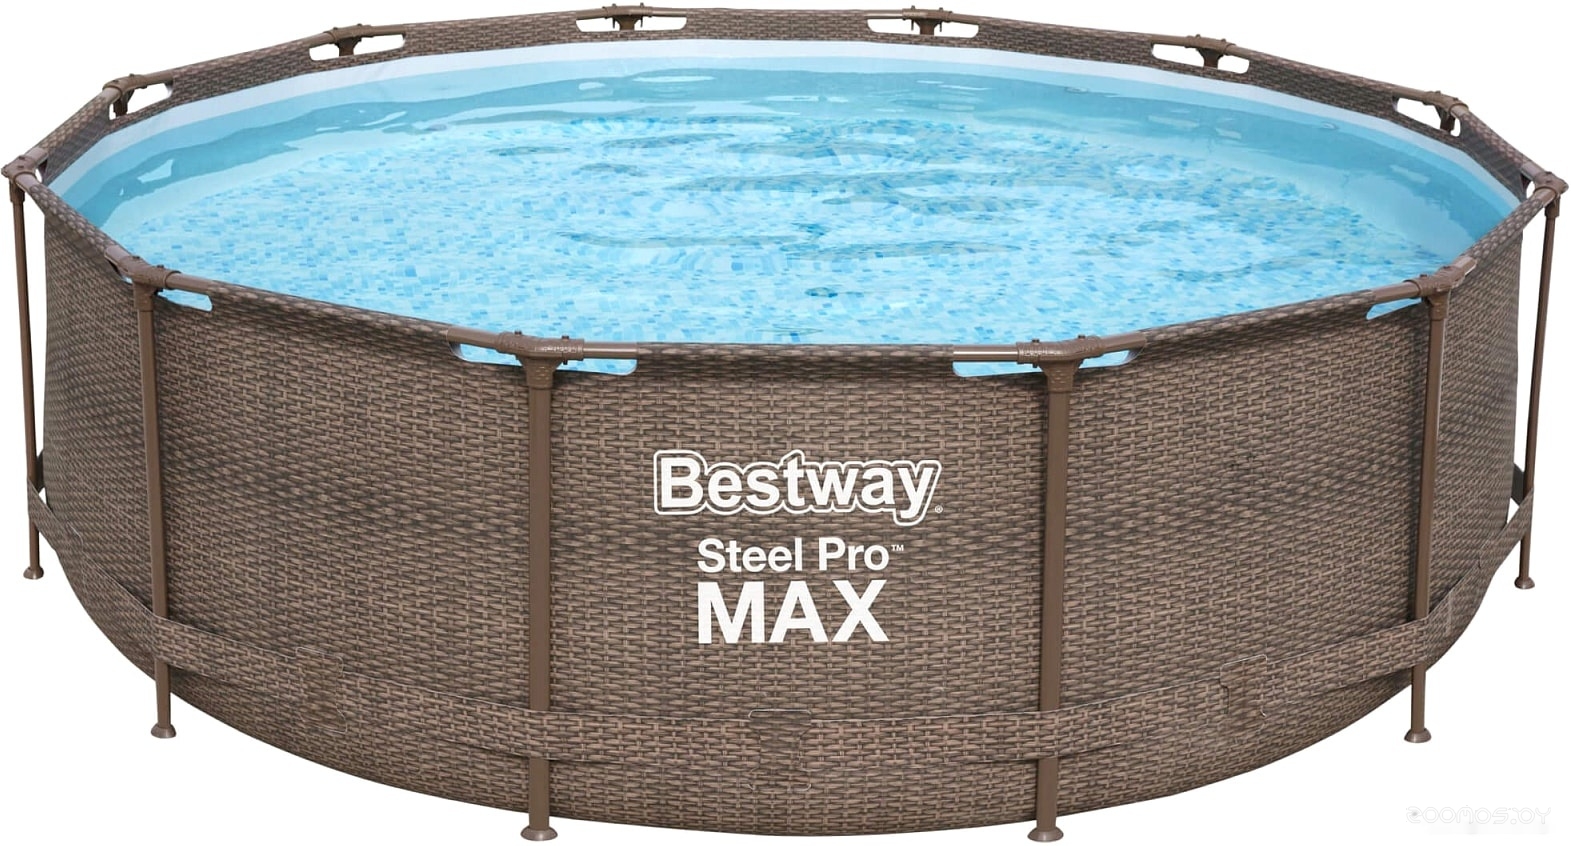   Bestway Steel Pro Max 56709 (366x100)     